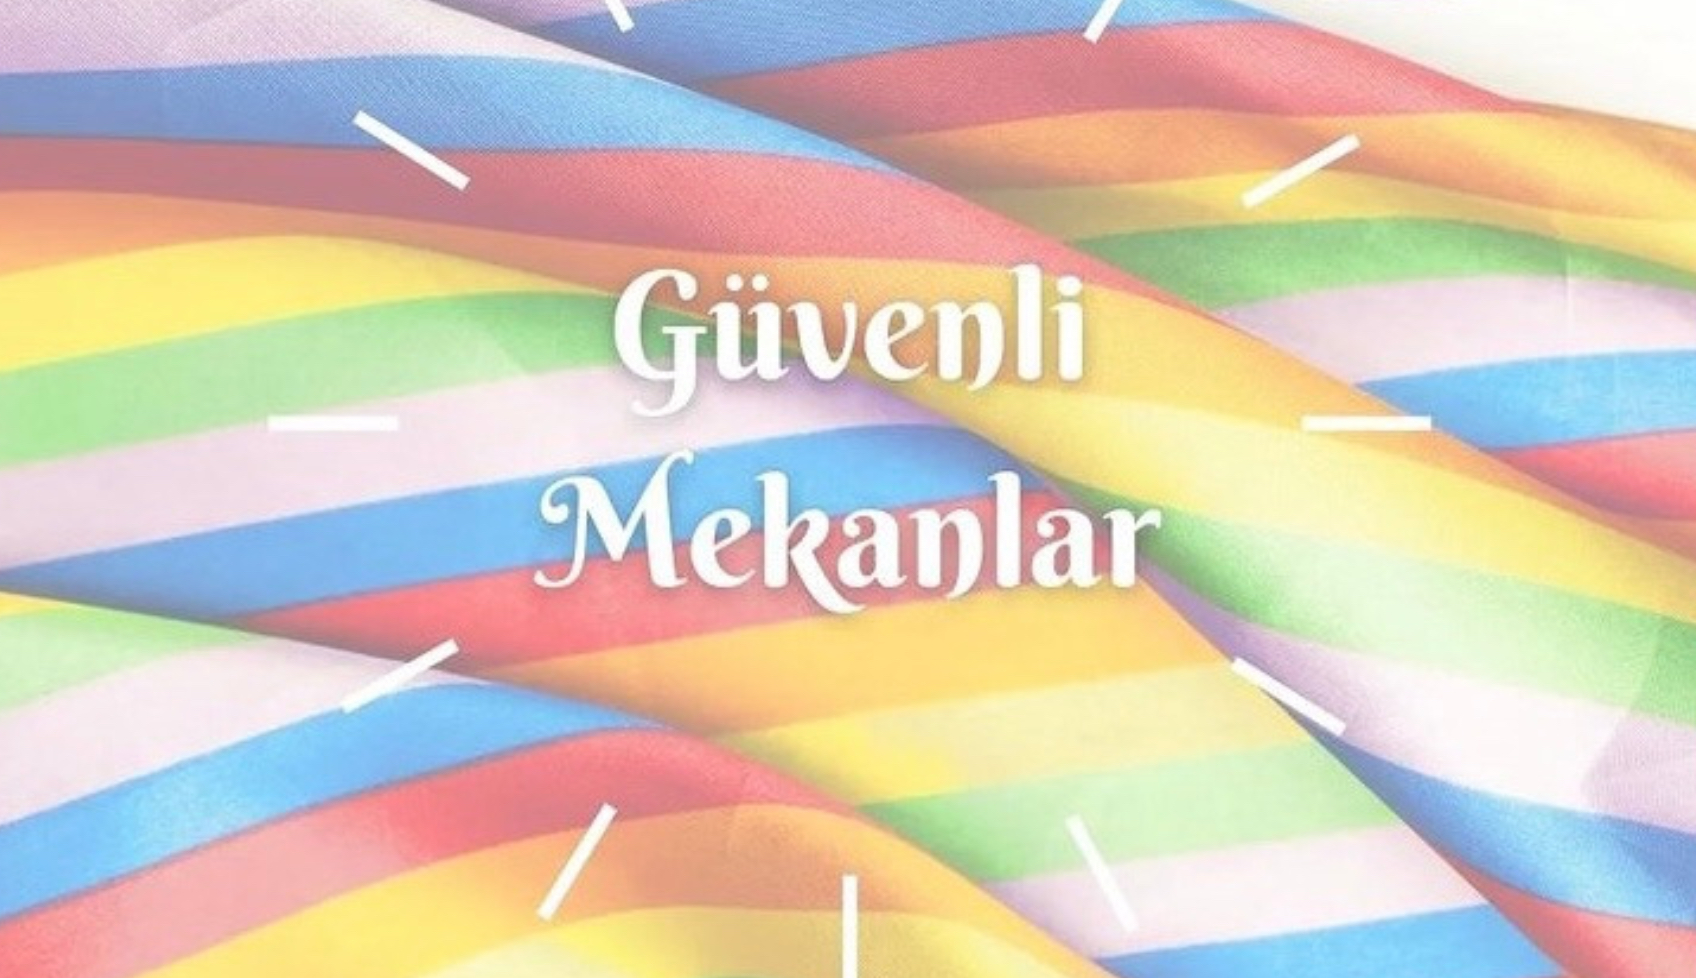 “Tüm Eskişehir güvenli olana kadar…” Kaos GL - LGBTİ+ Haber Portalı